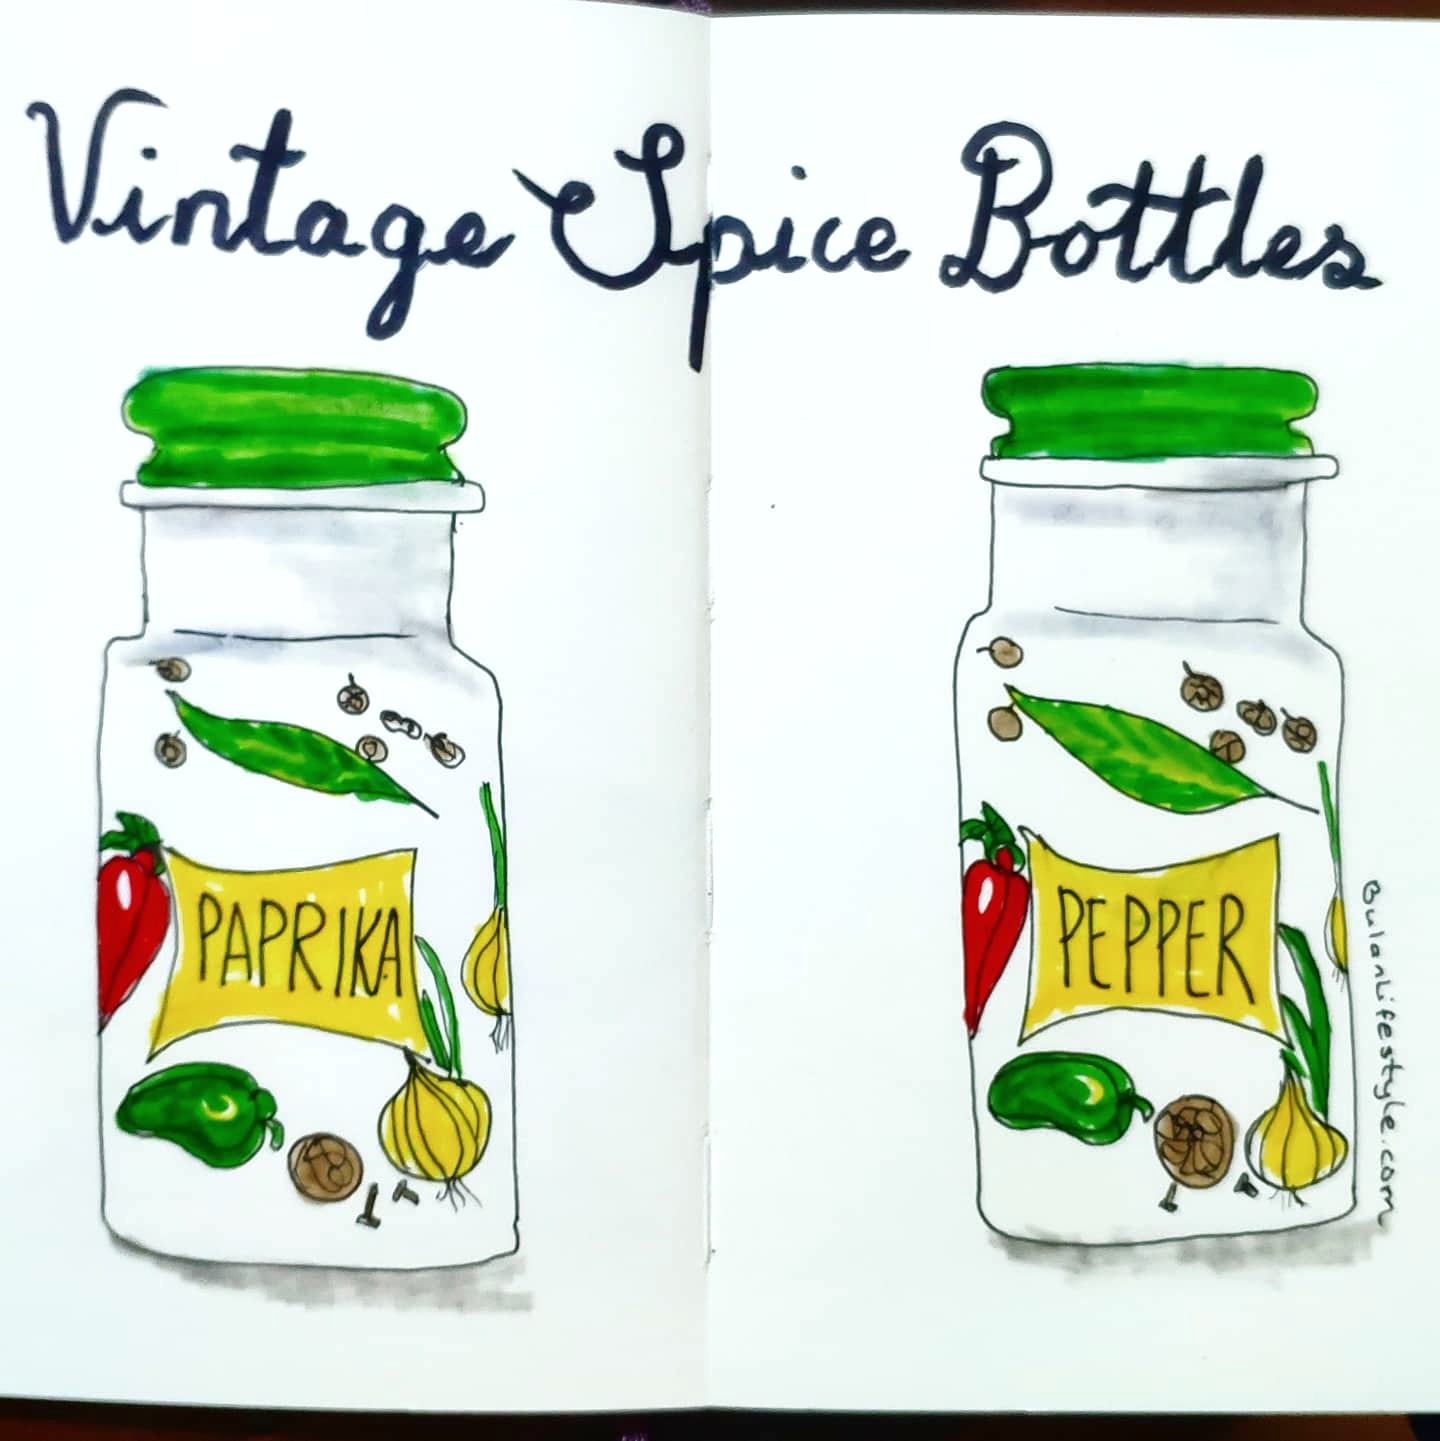 Spice bottles